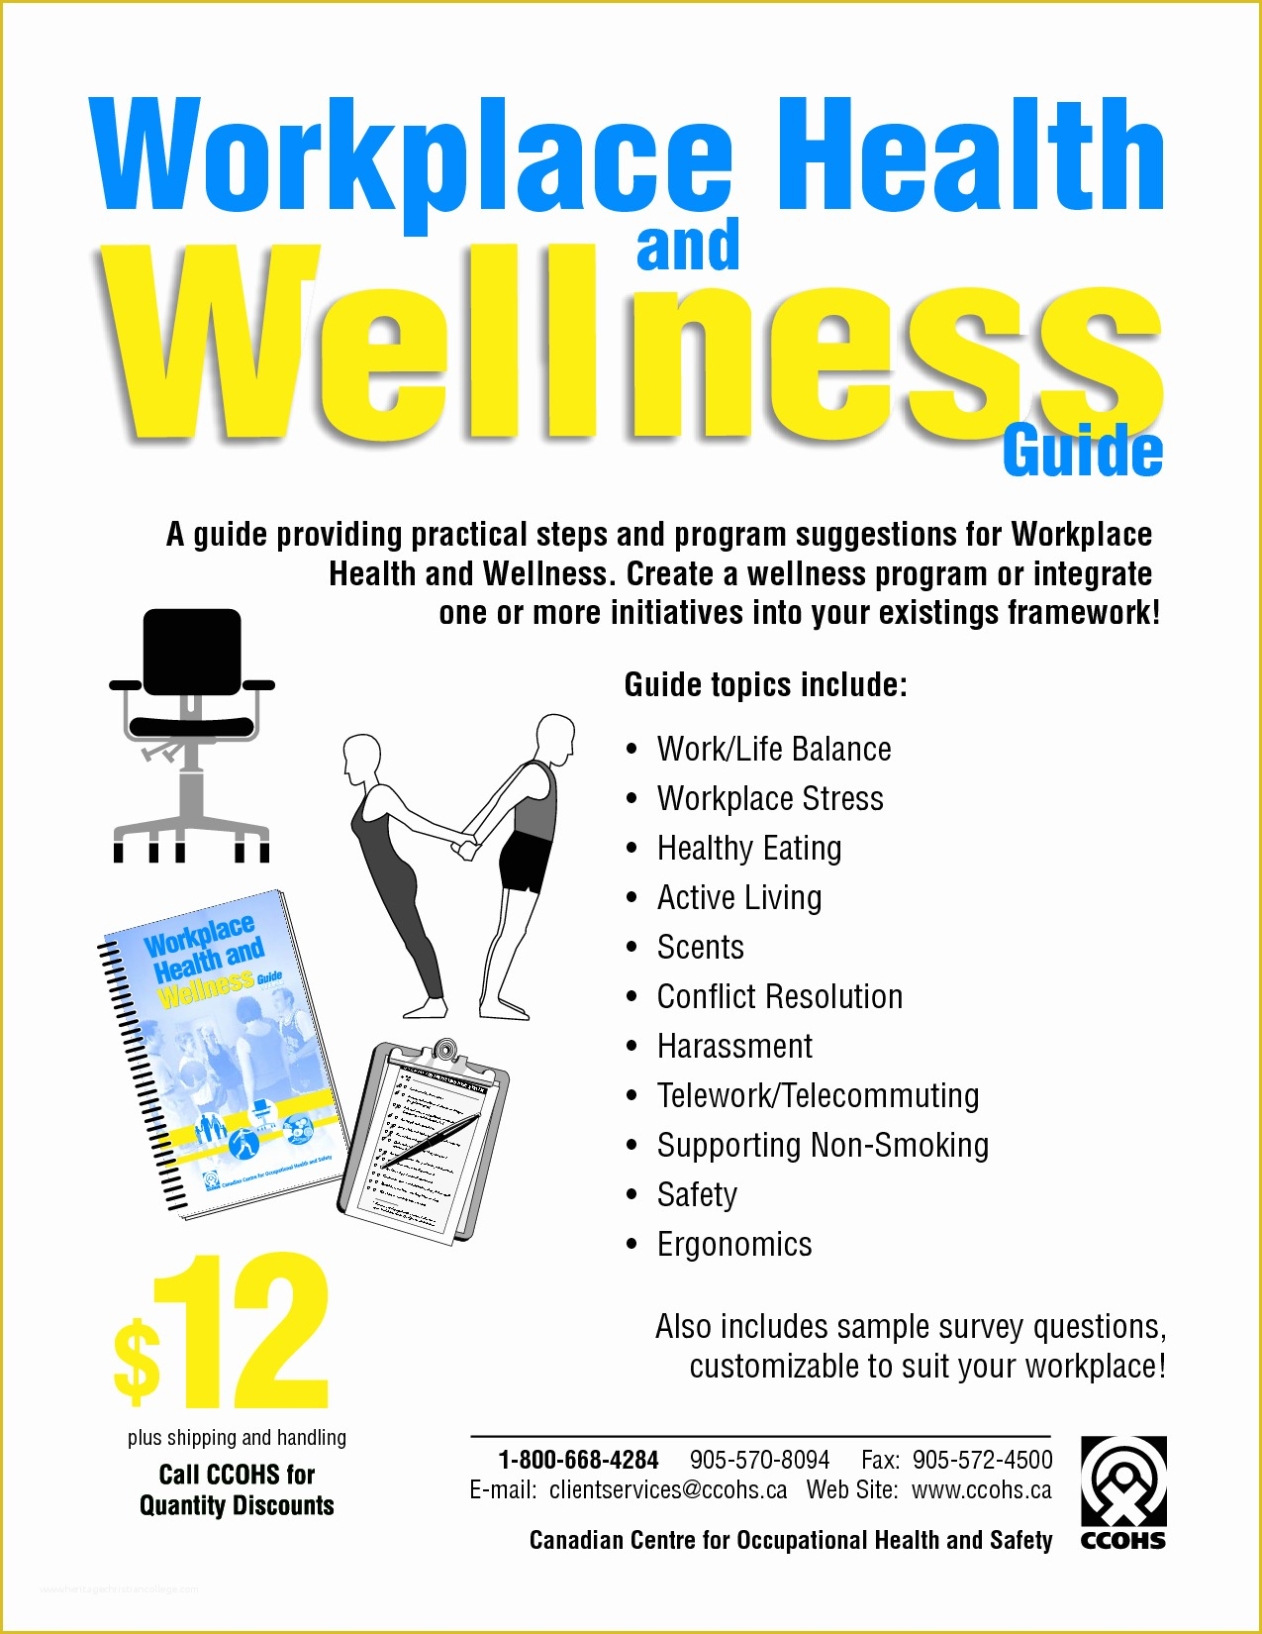 Wellness Flyer Templates Free Of Health Fair Flyer Template With Health Fair Flyer Template